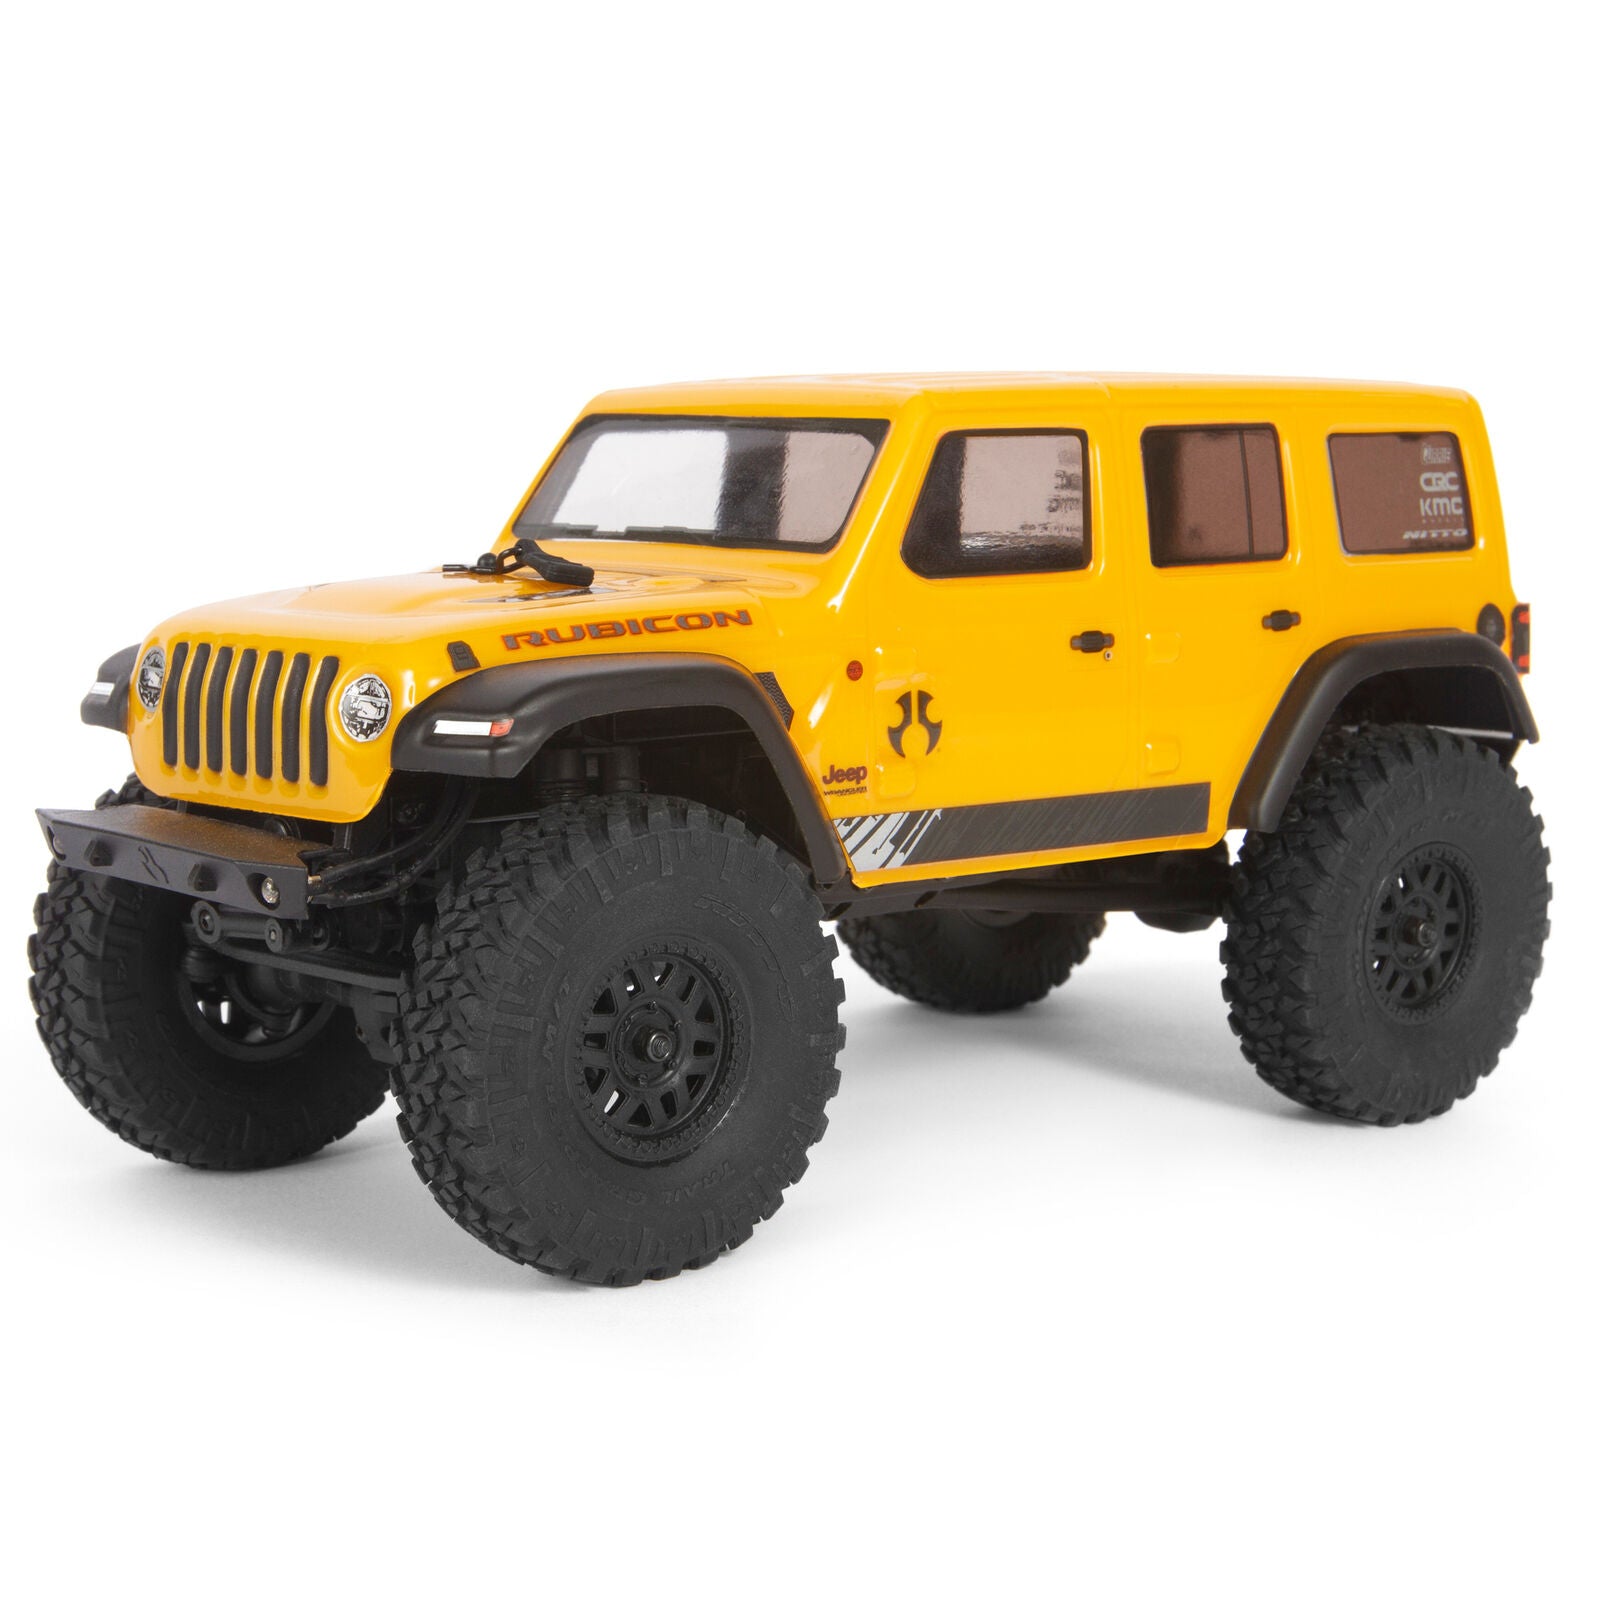 AXIAL AXI00002 1/24 SCX24 2019 Jeep Wrangler JLU CRC Rock Crawler 4WD RTR